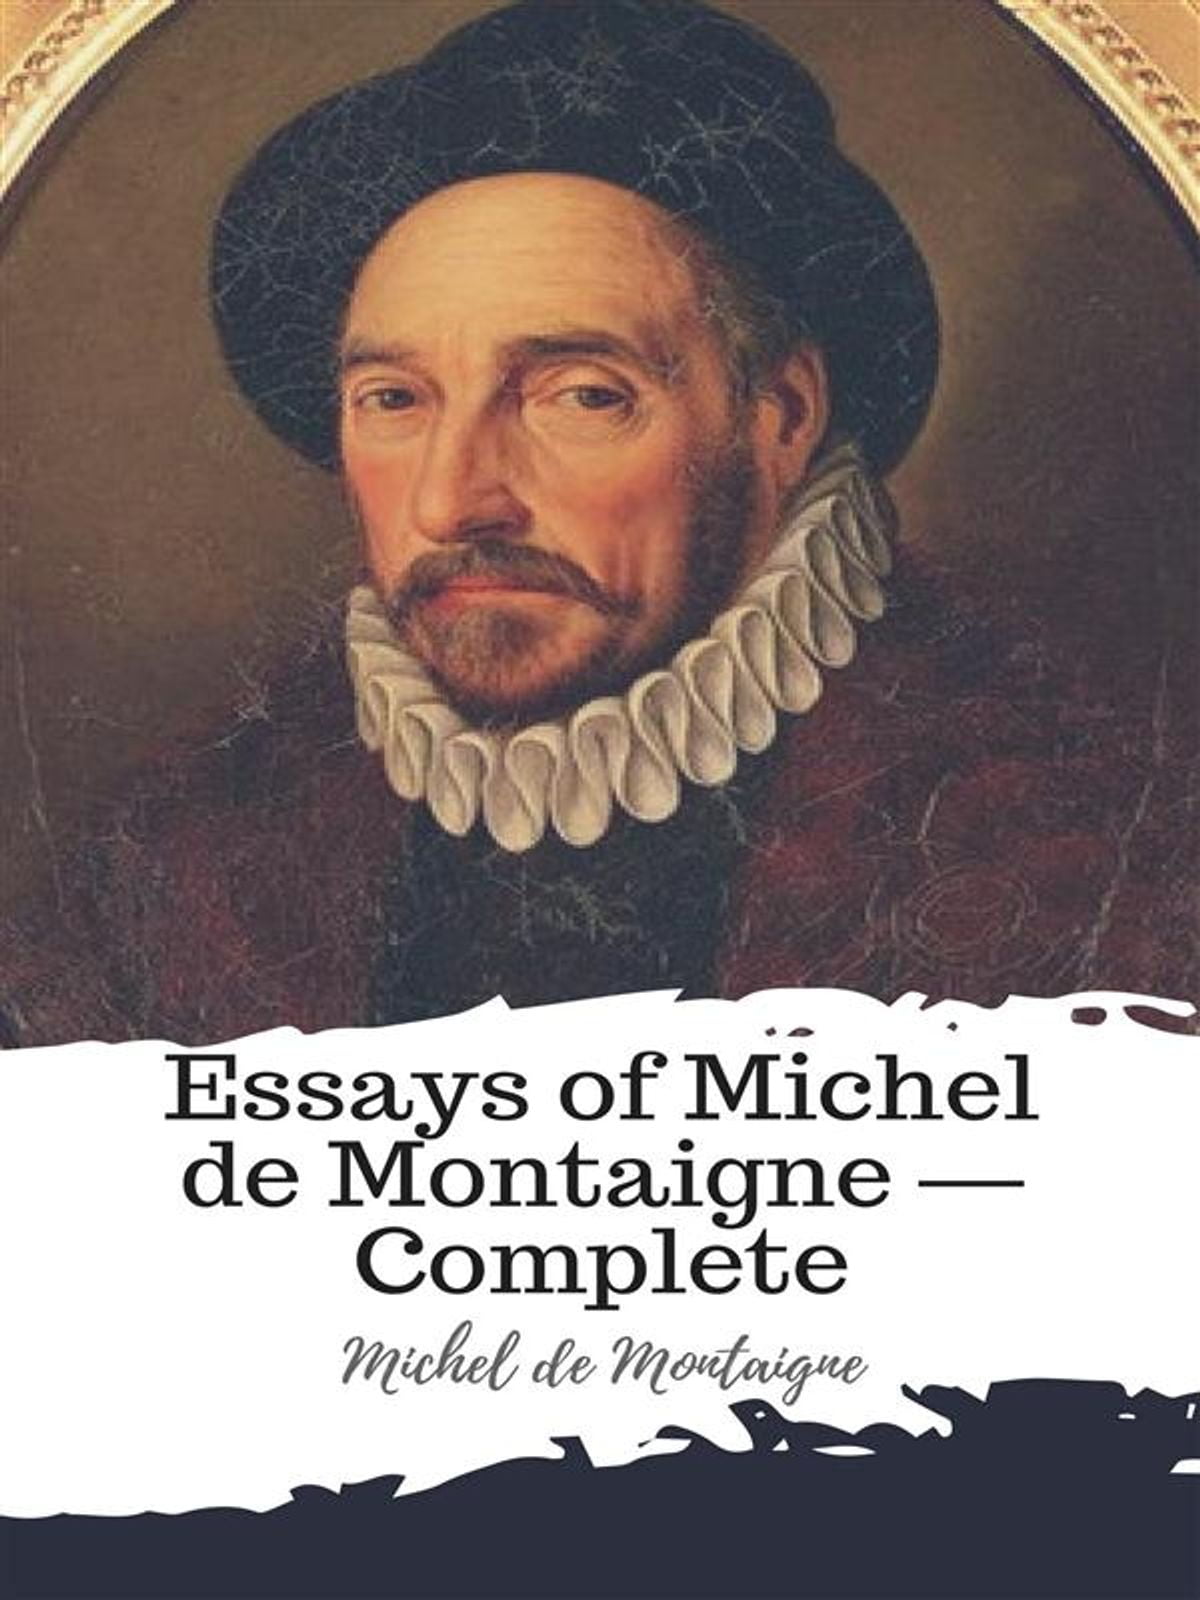 the complete essays of montaigne summary